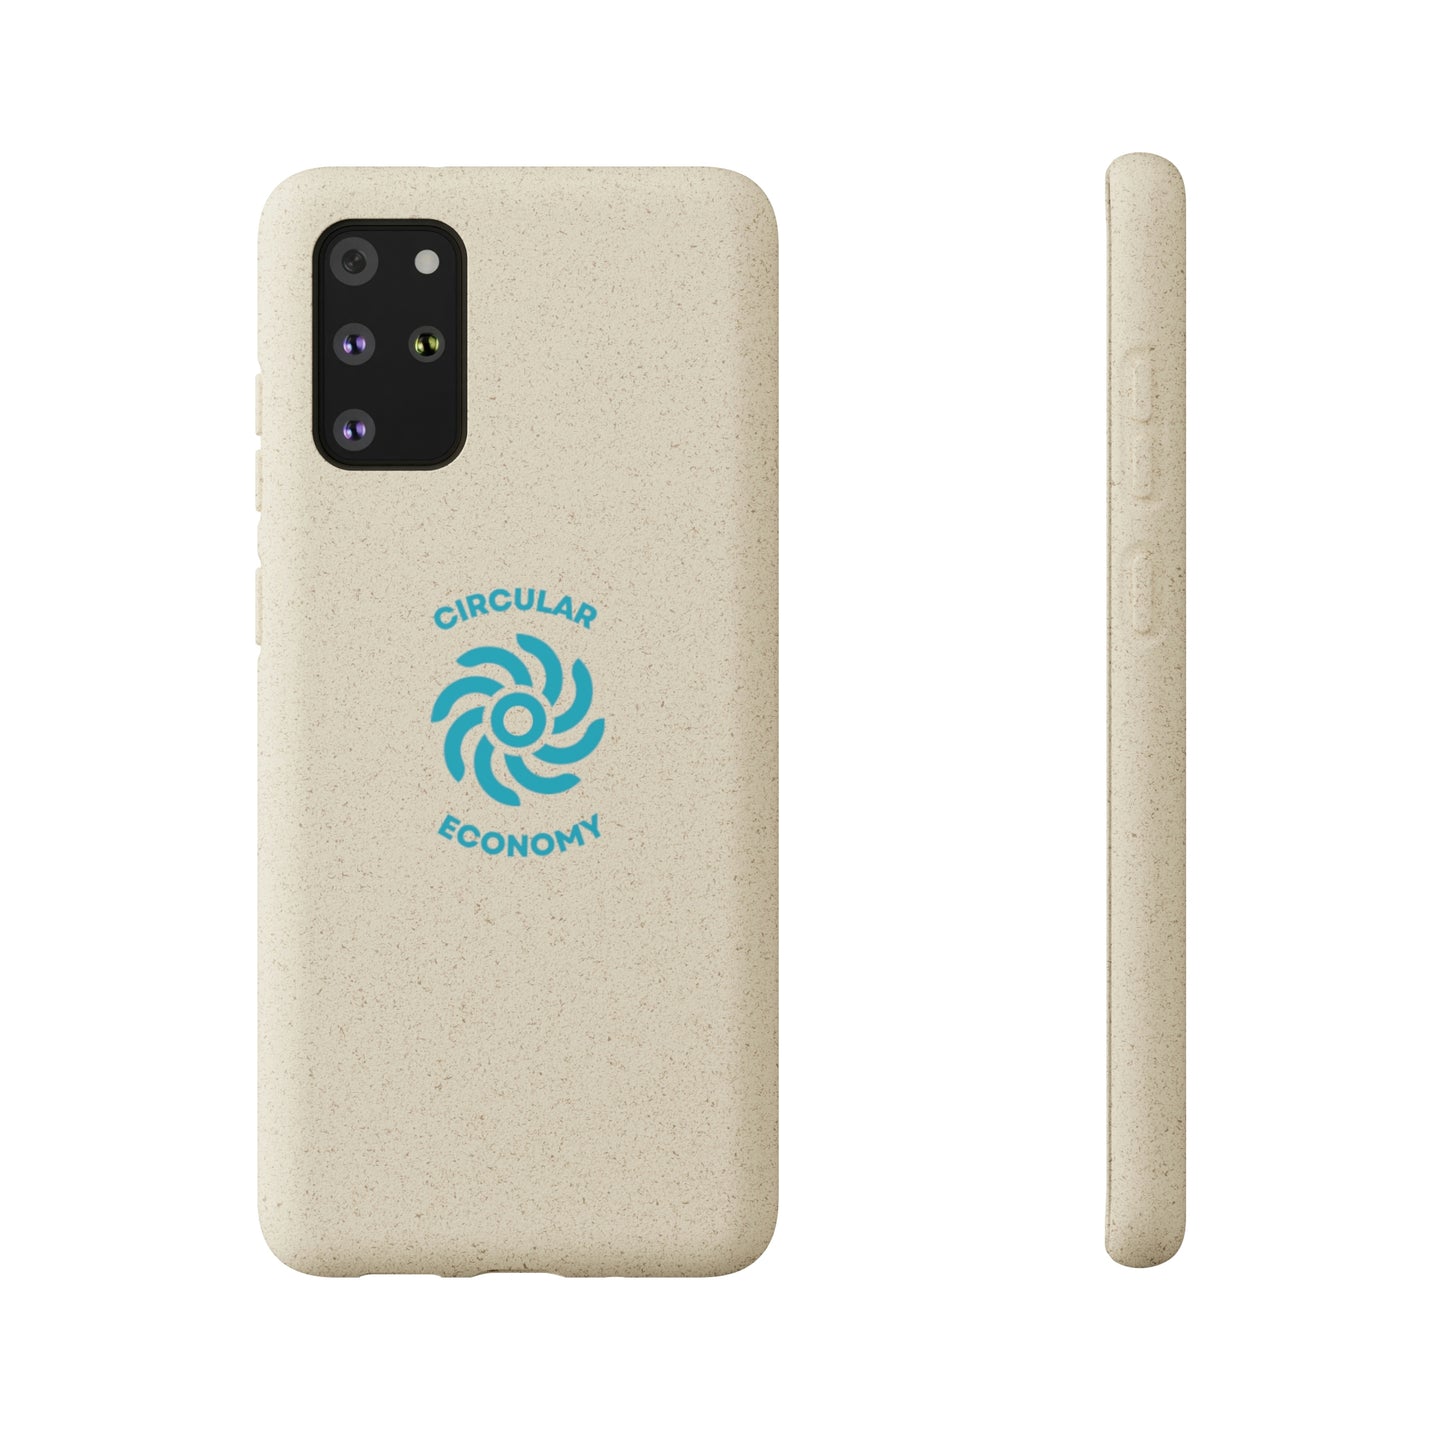 Biodegradable Samsung Cases - Circular Economy